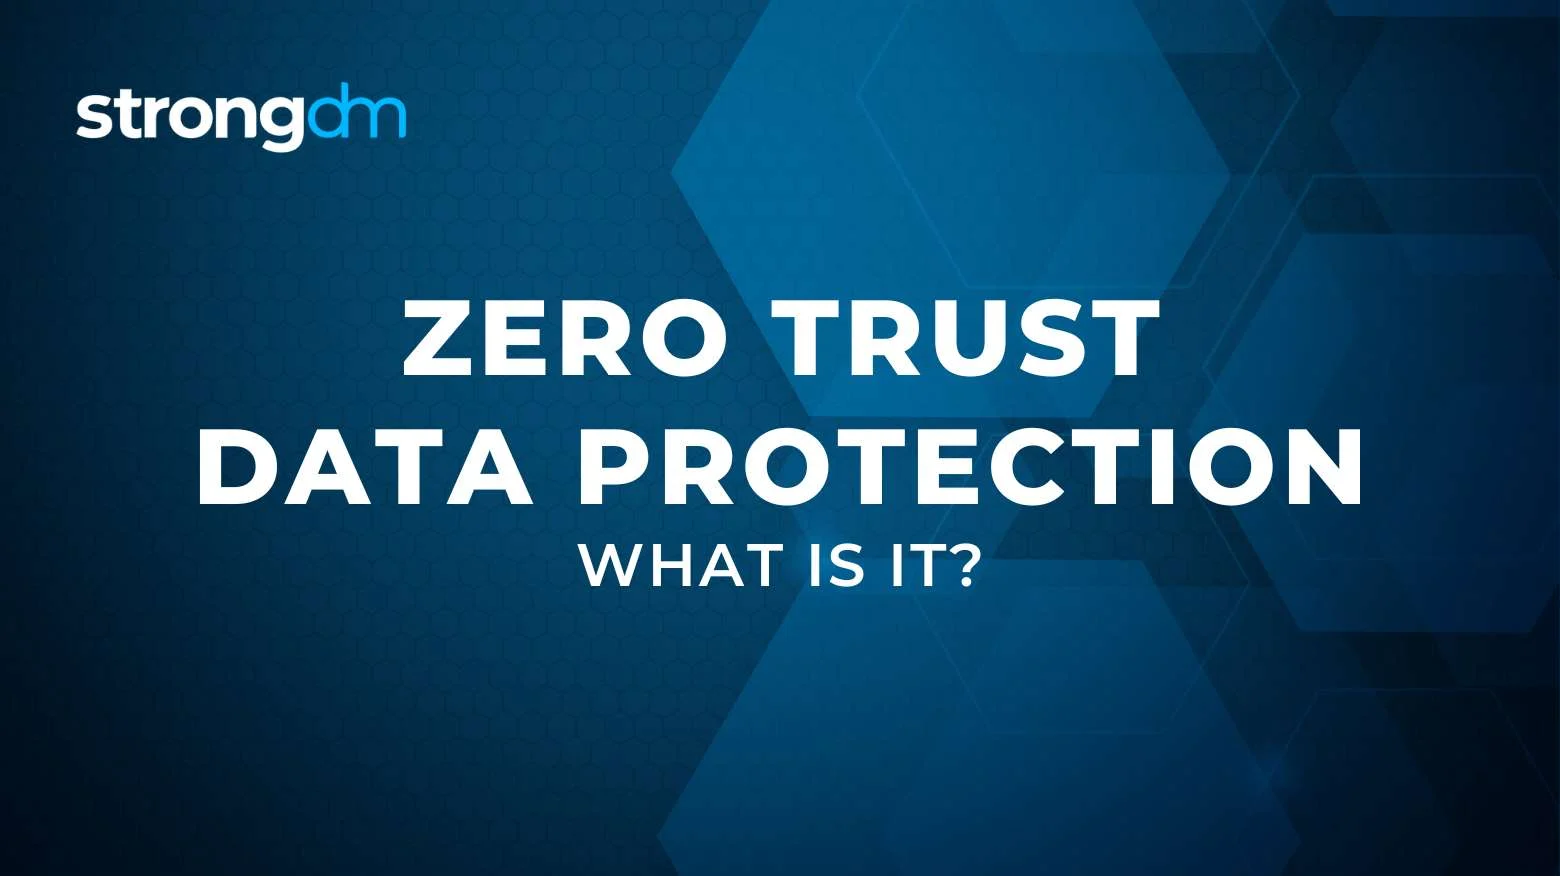 What Is Zero Trust Data Protection?